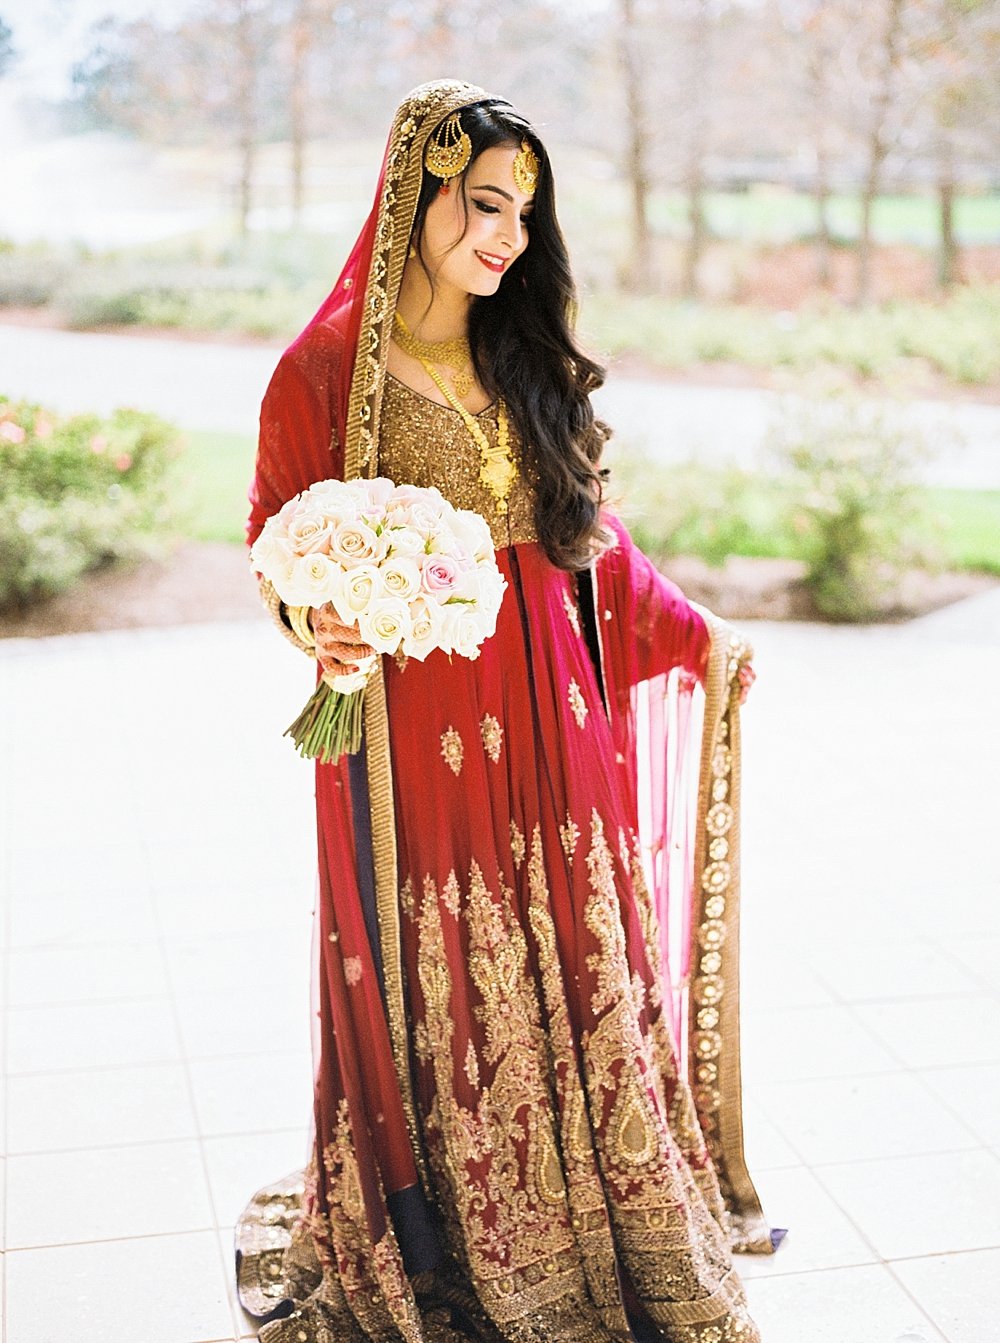  Colorful Indian Wedding Hilton Bonnet Creek Waldorf Astoria - Florida Wedding - Fine Art Photographer | Ashley Holstein Photography